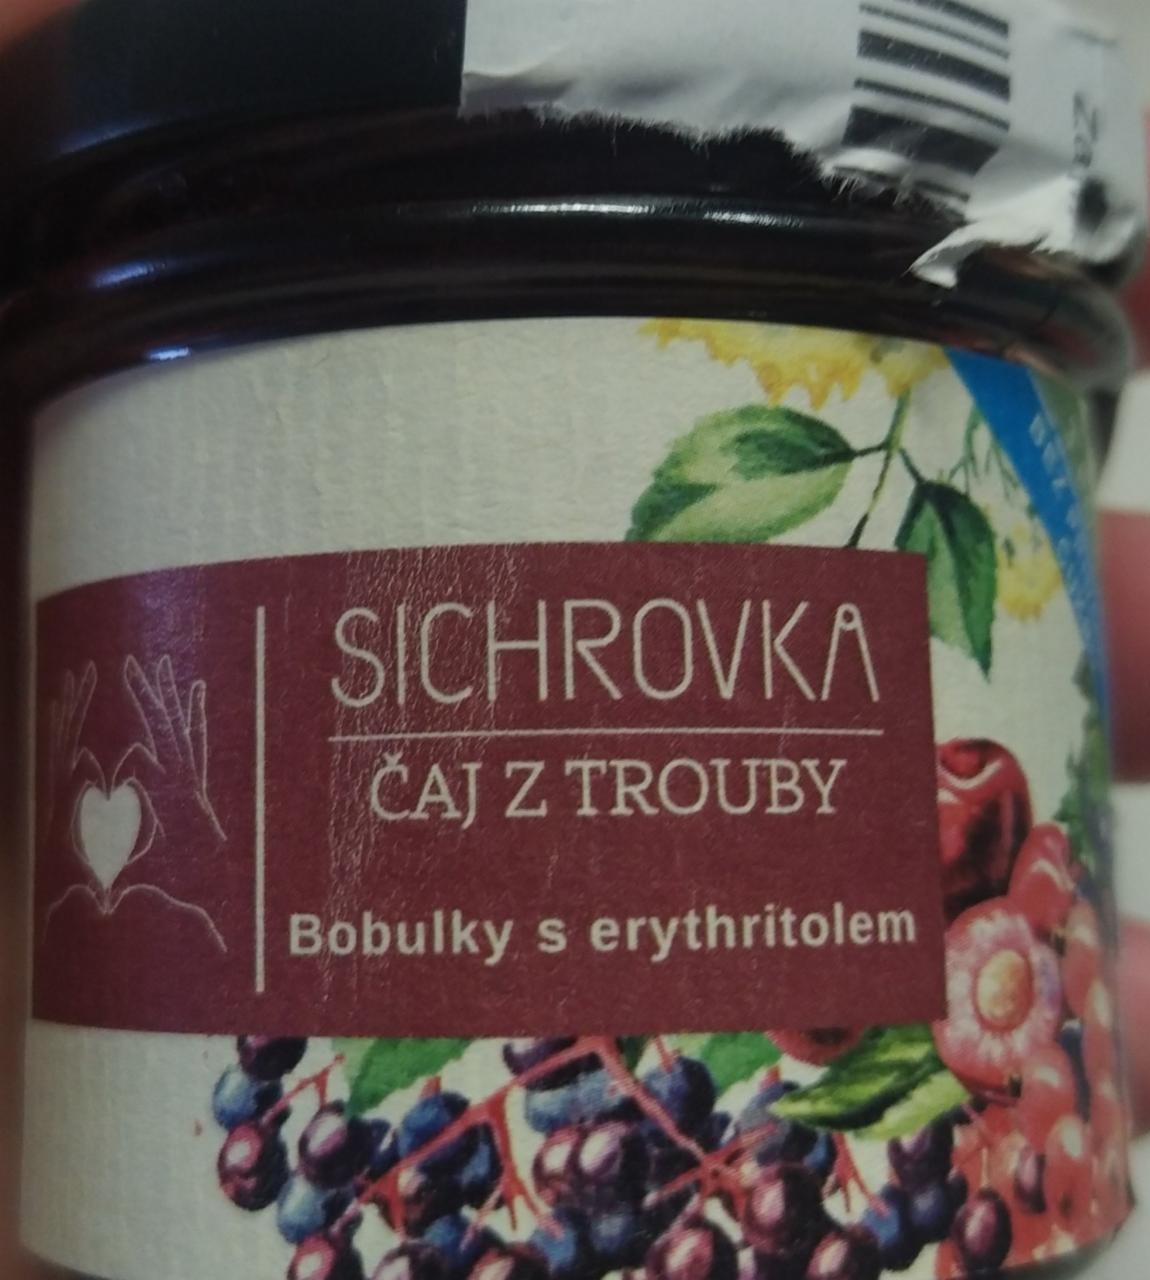 Fotografie - Čaj z trouby Bobulky s erythritolem Sichrovka